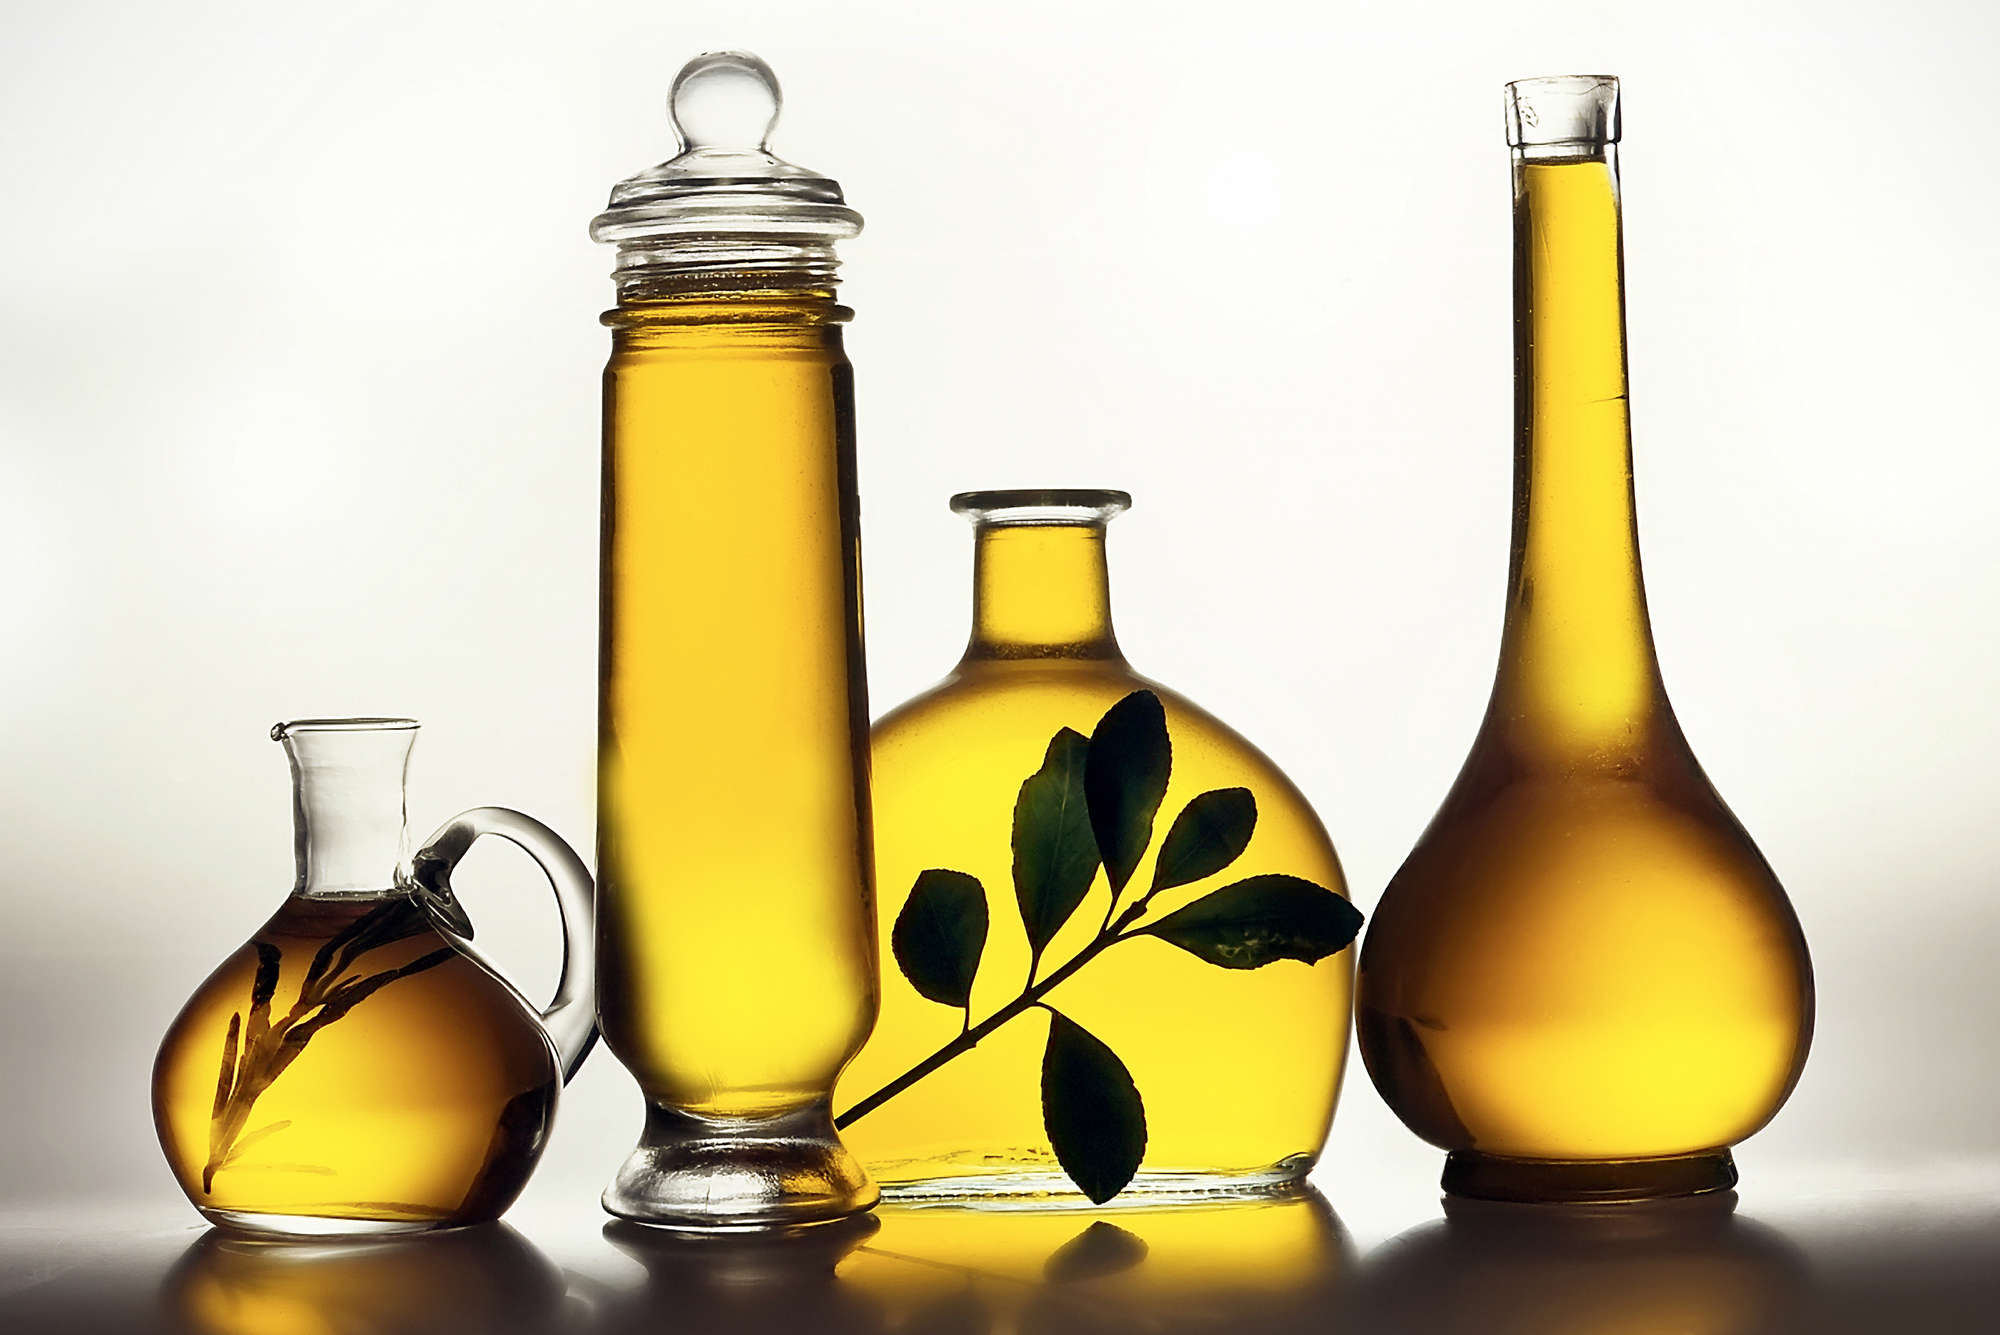             Fototapete Flaschen mit Olivenöl – Perlmutt Glattvlies
        